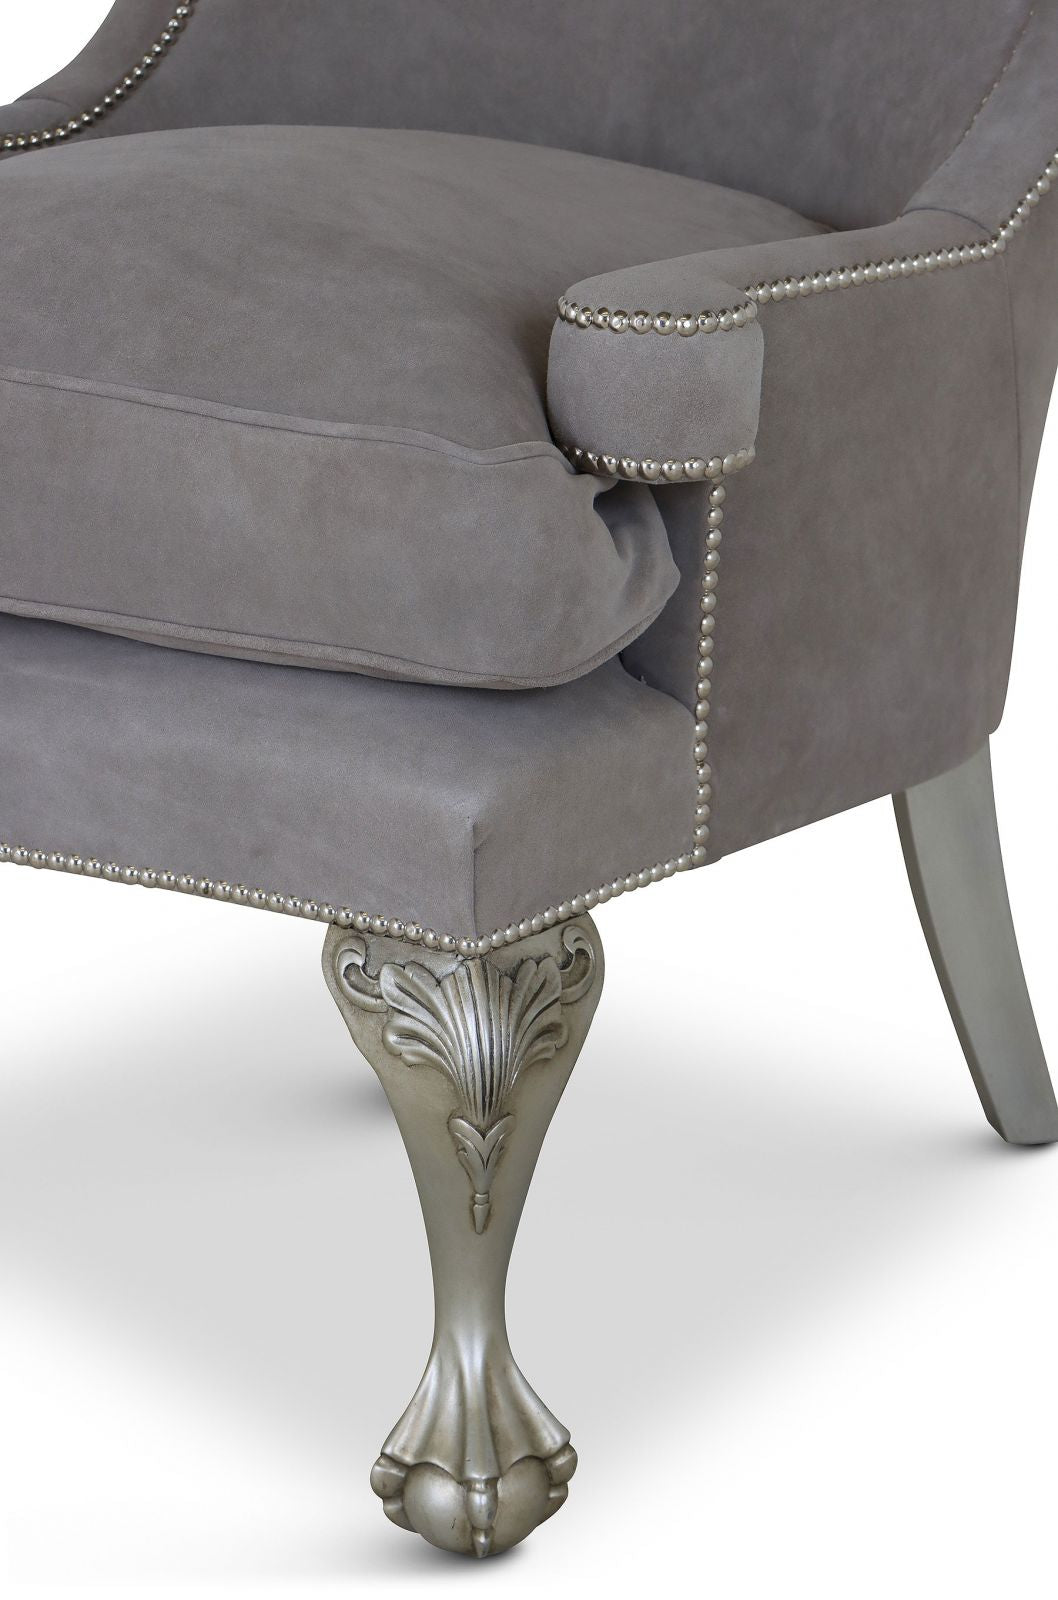 Okeford wing chair in grey suede calf hide